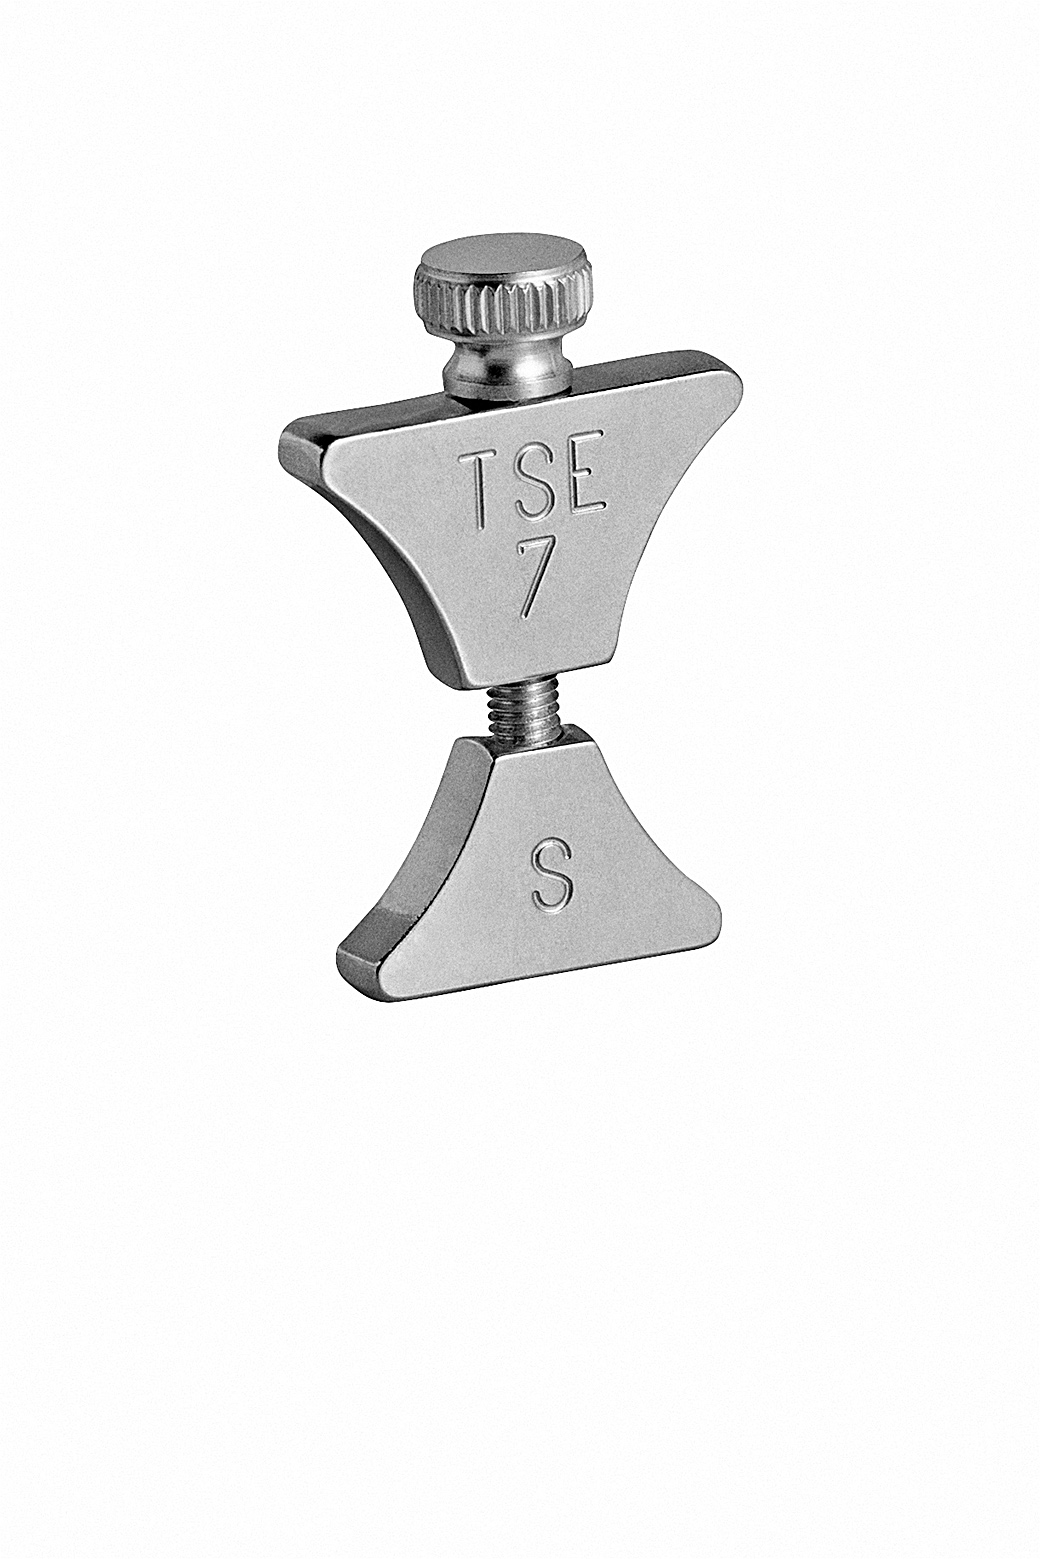 TSE 7S Tonstabilisator für Blechbläser Tone Stability Enhancer Drehventil